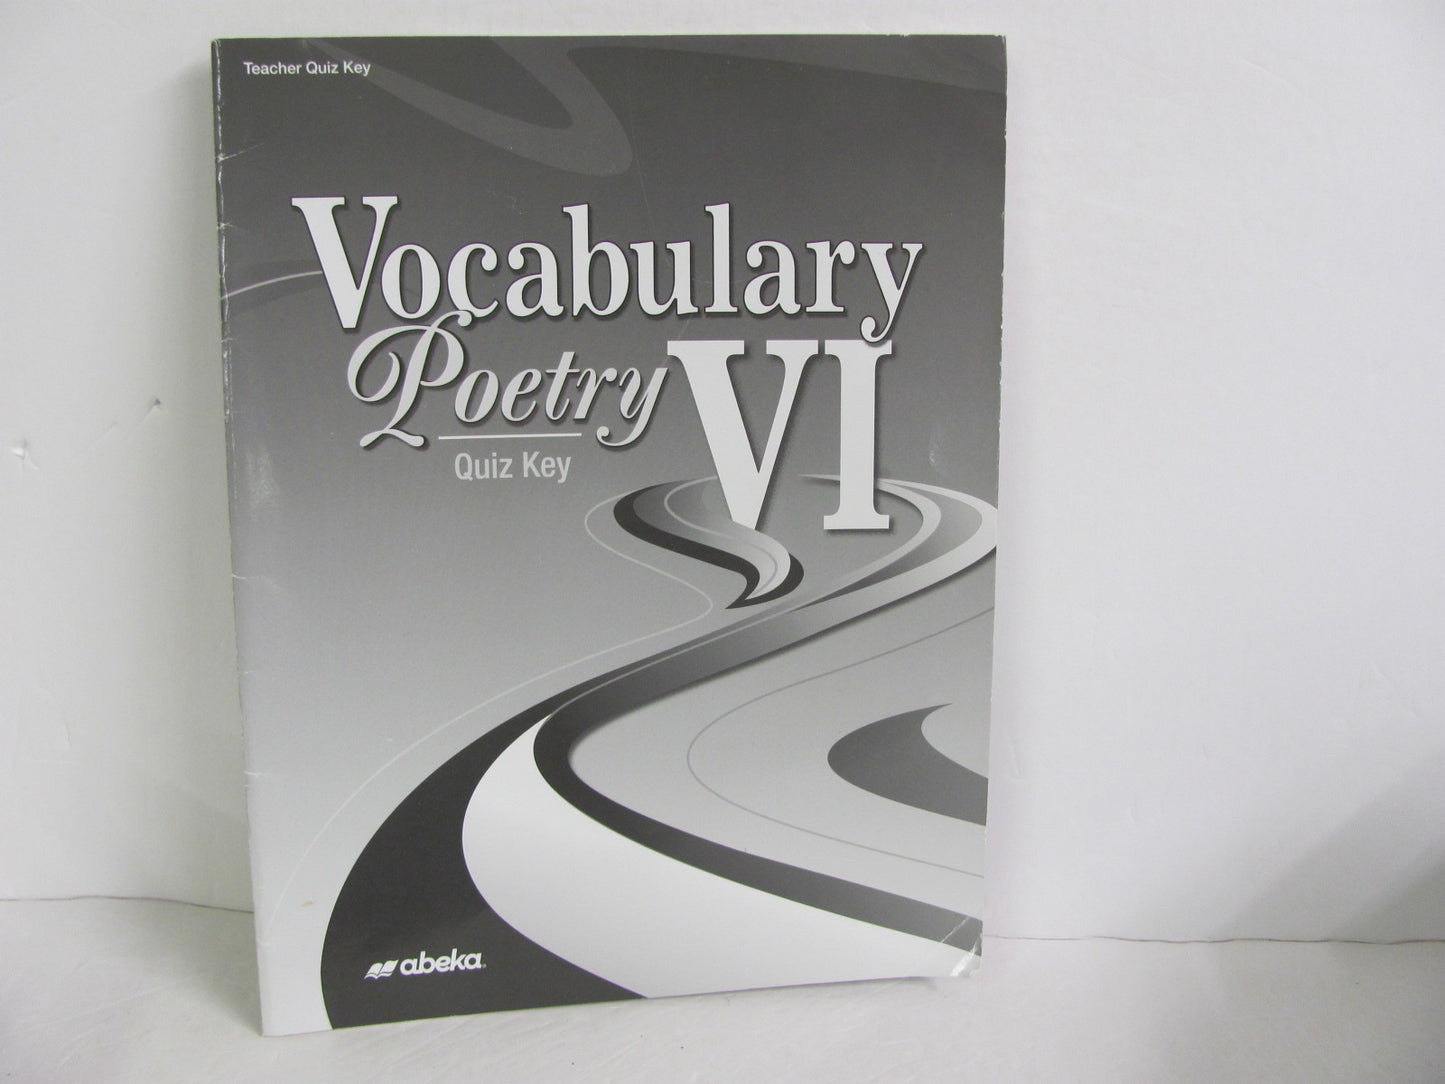 Vocabulary Poetry VI Abeka Quiz Key Pre-Owned Spelling/Vocabulary Books